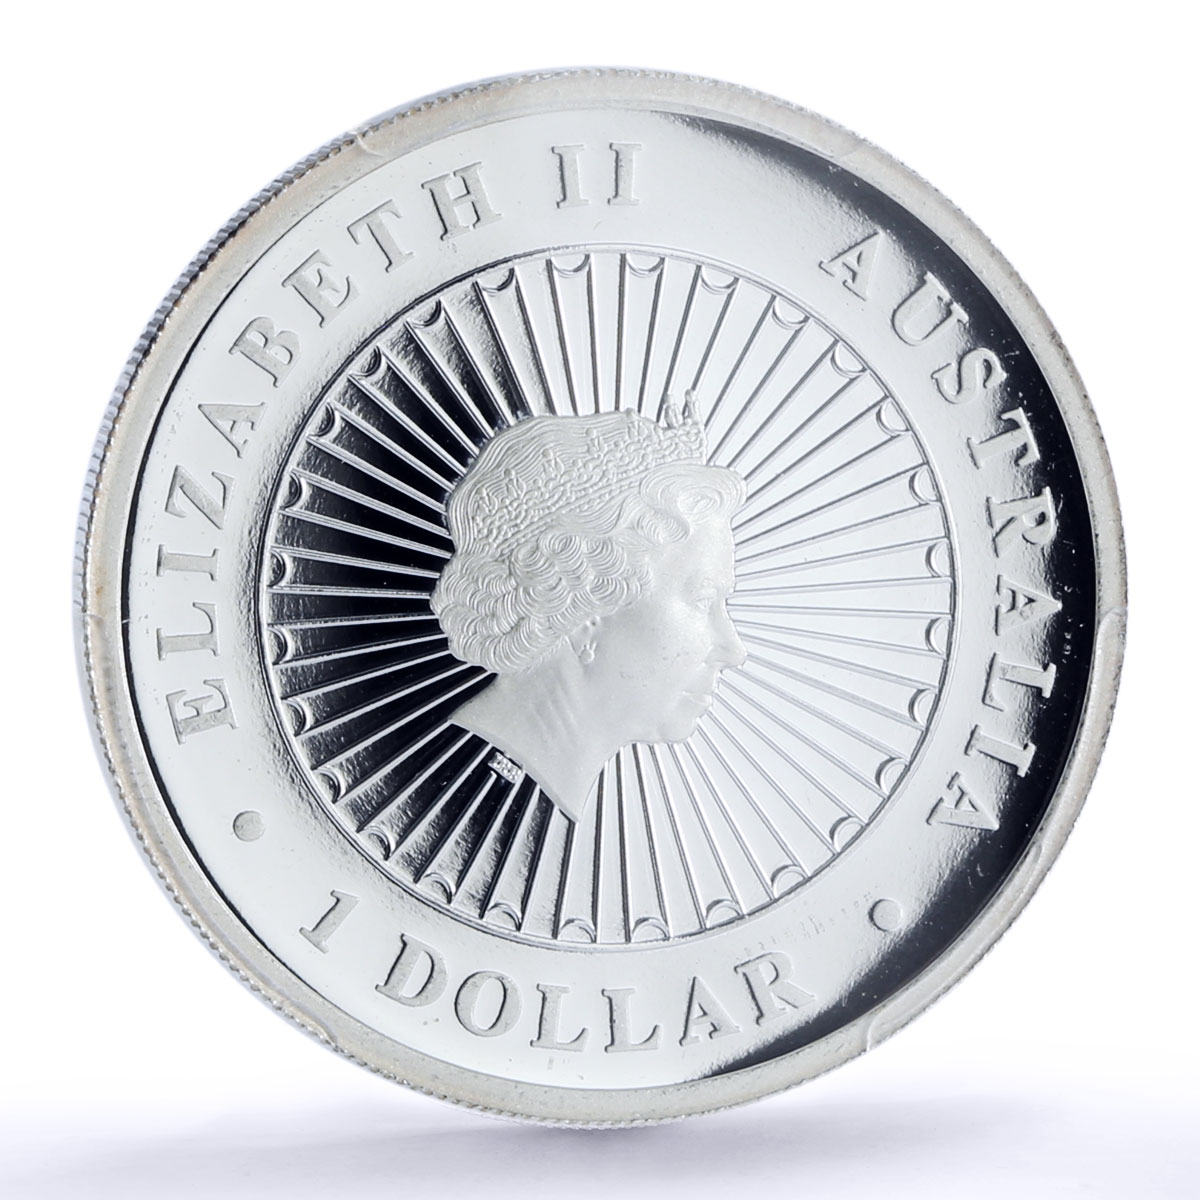 Australia 1 dollar Australian Opal series The Koala PR68 PCGS silver coin 2012